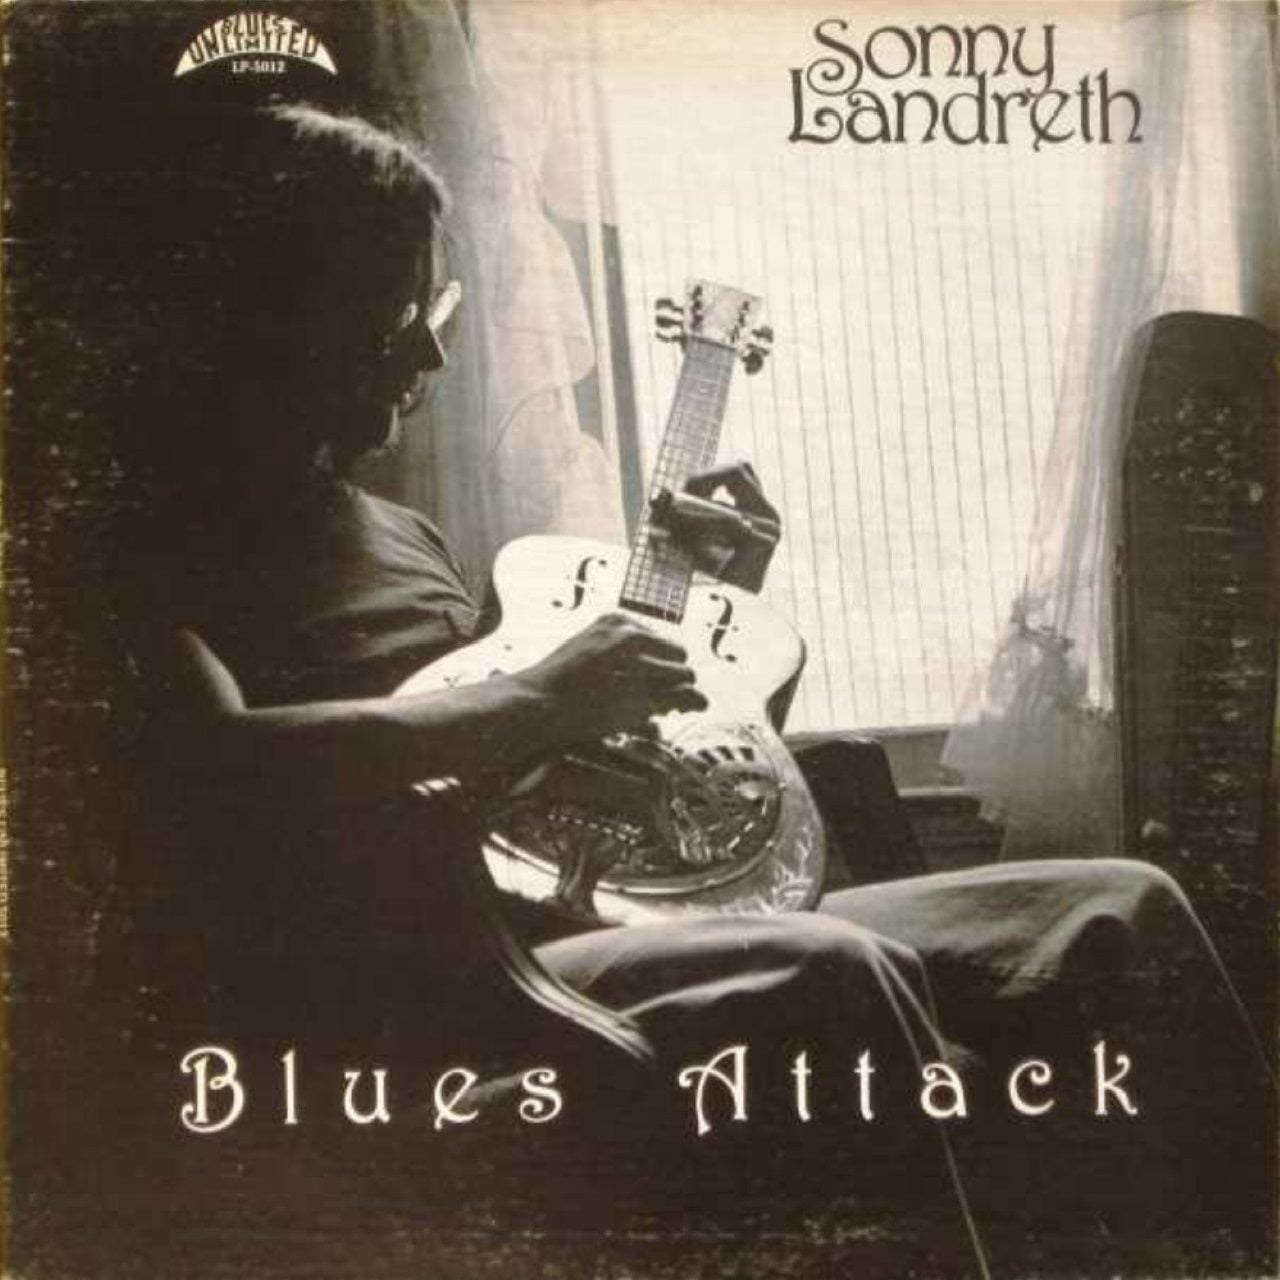 Sonny Landreth – Blues Attack cover album